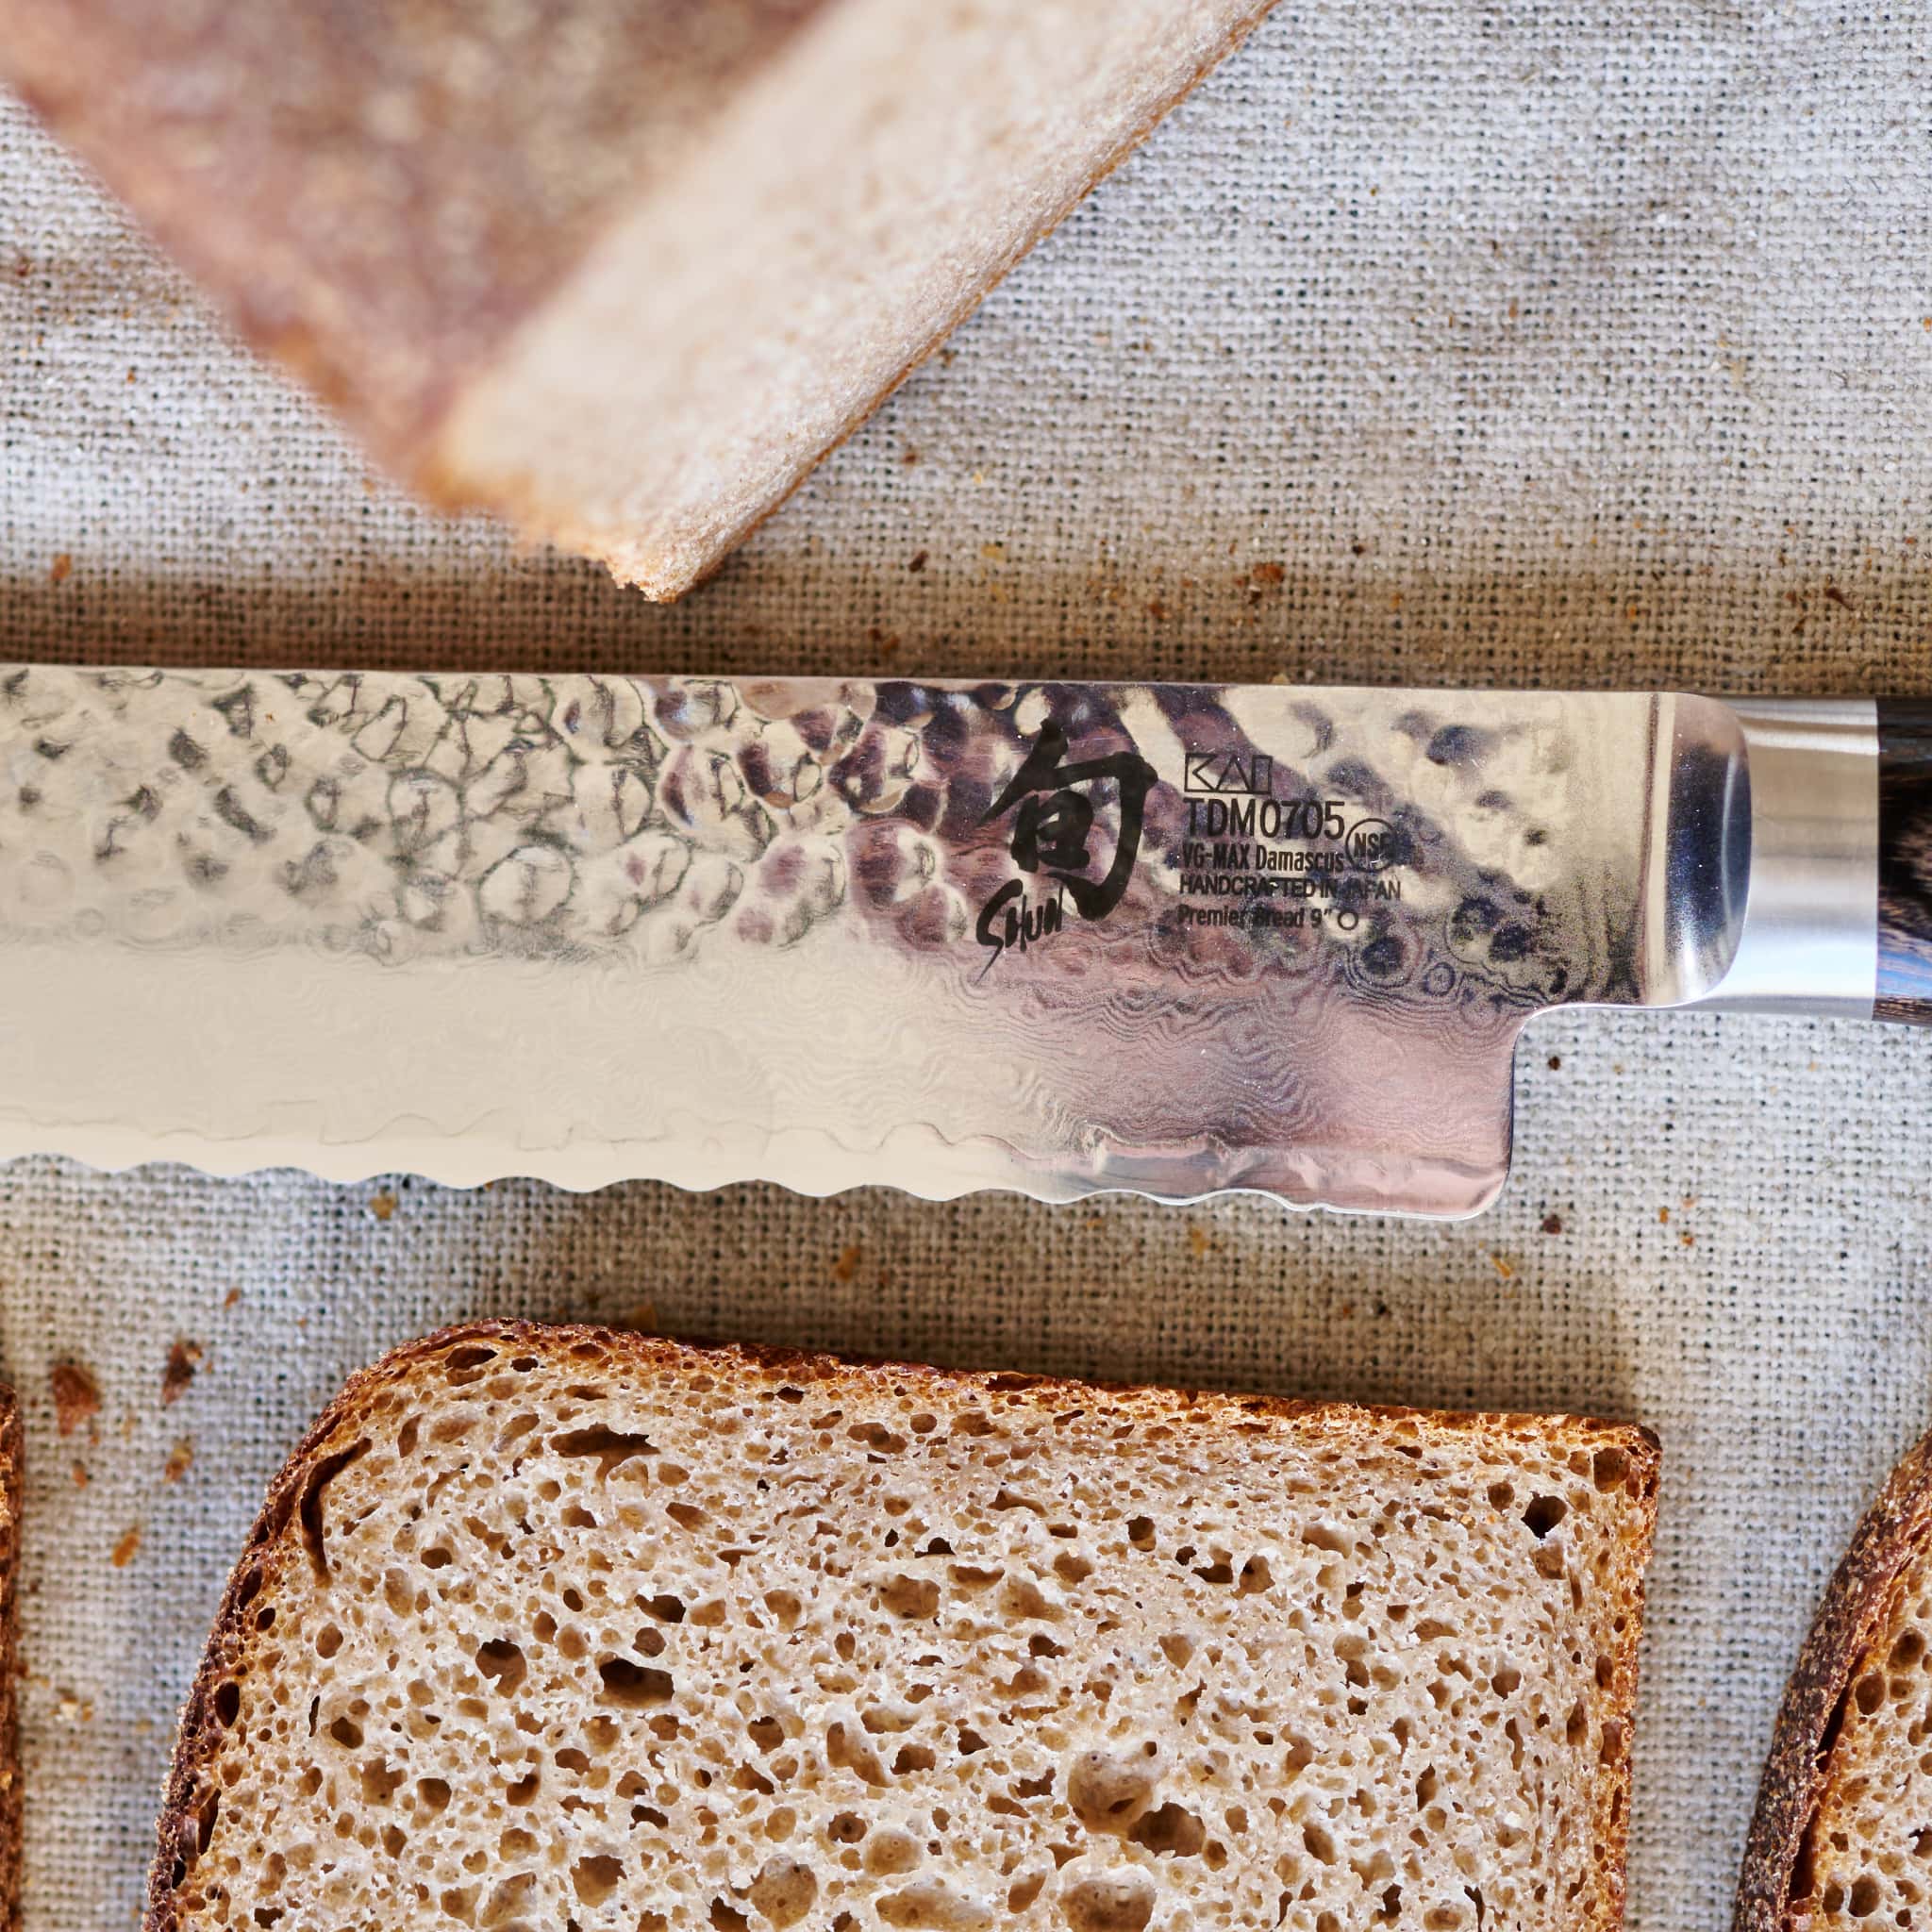 9 Serrated Damascus Bread Knife